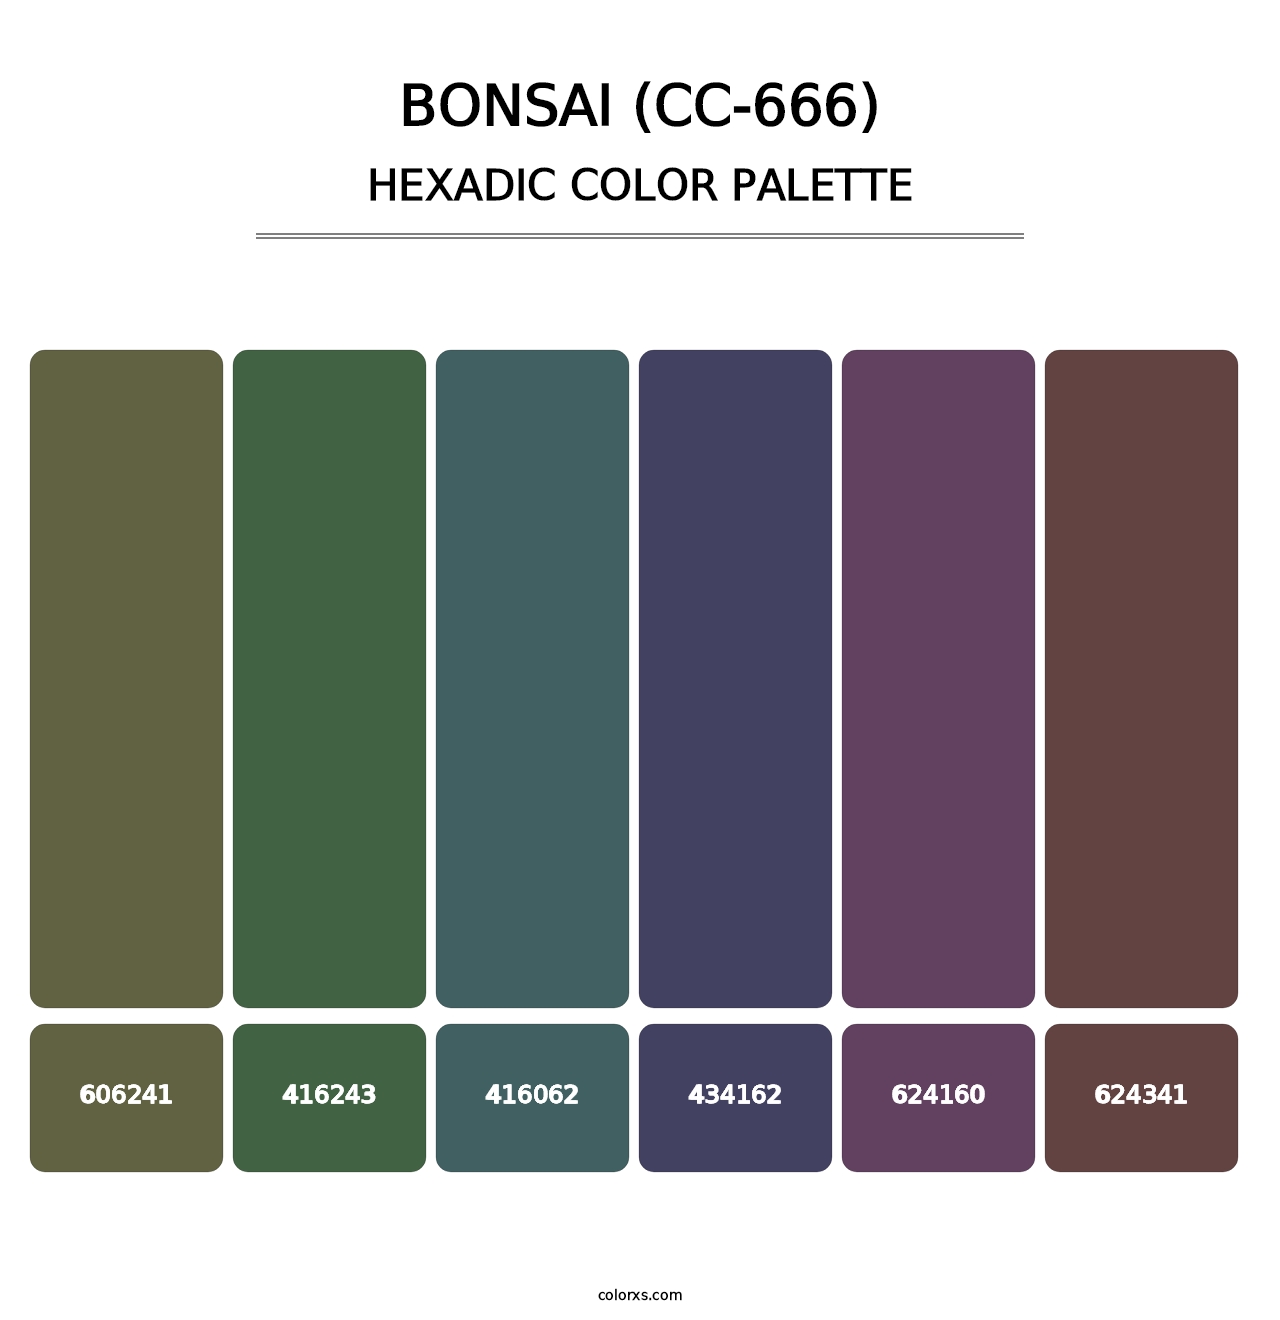 Bonsai (CC-666) - Hexadic Color Palette